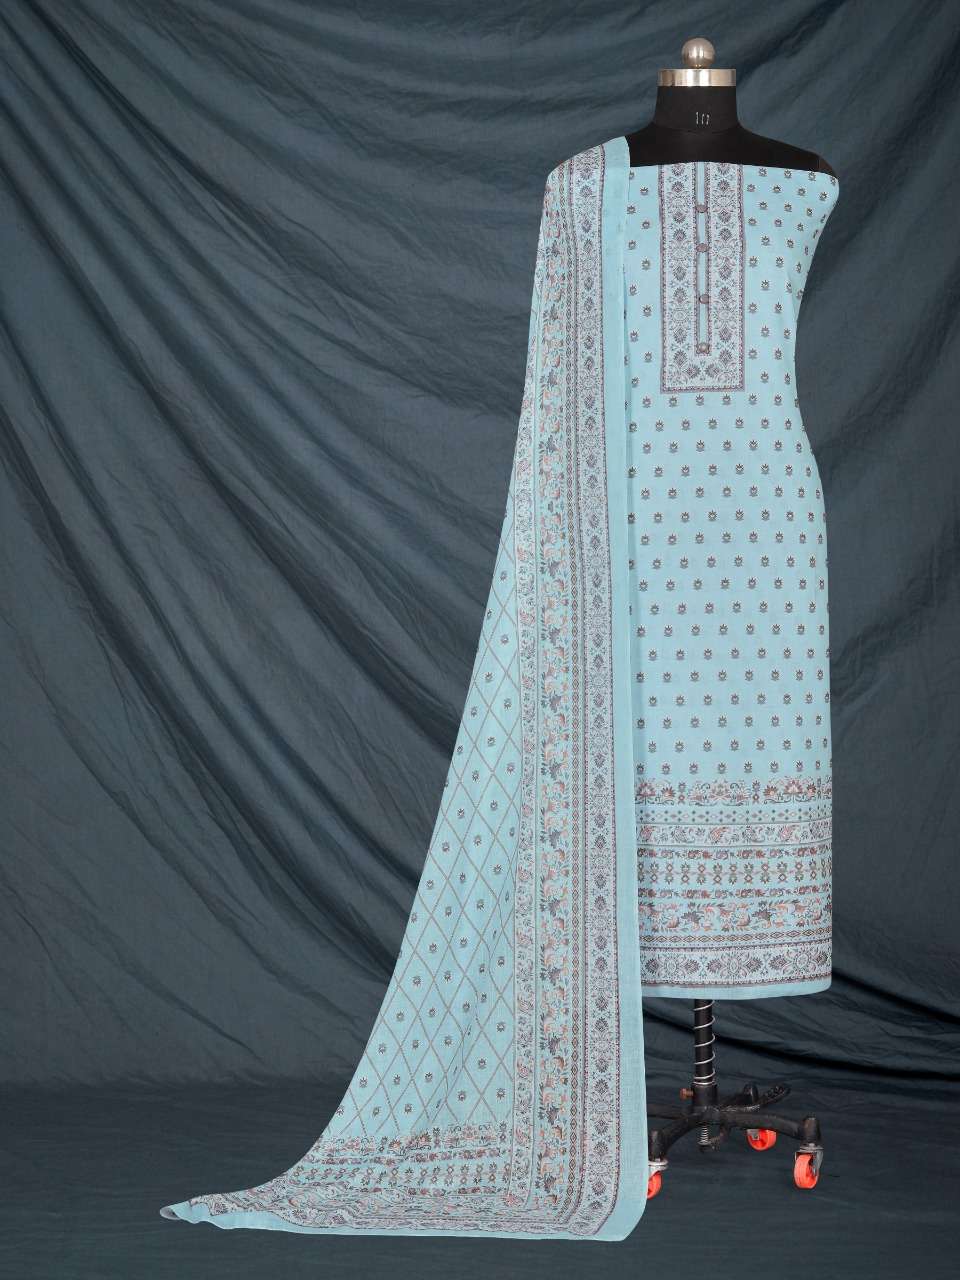 Bipson 1764 catalog  cotton Digital Printed Designer Dress Material 